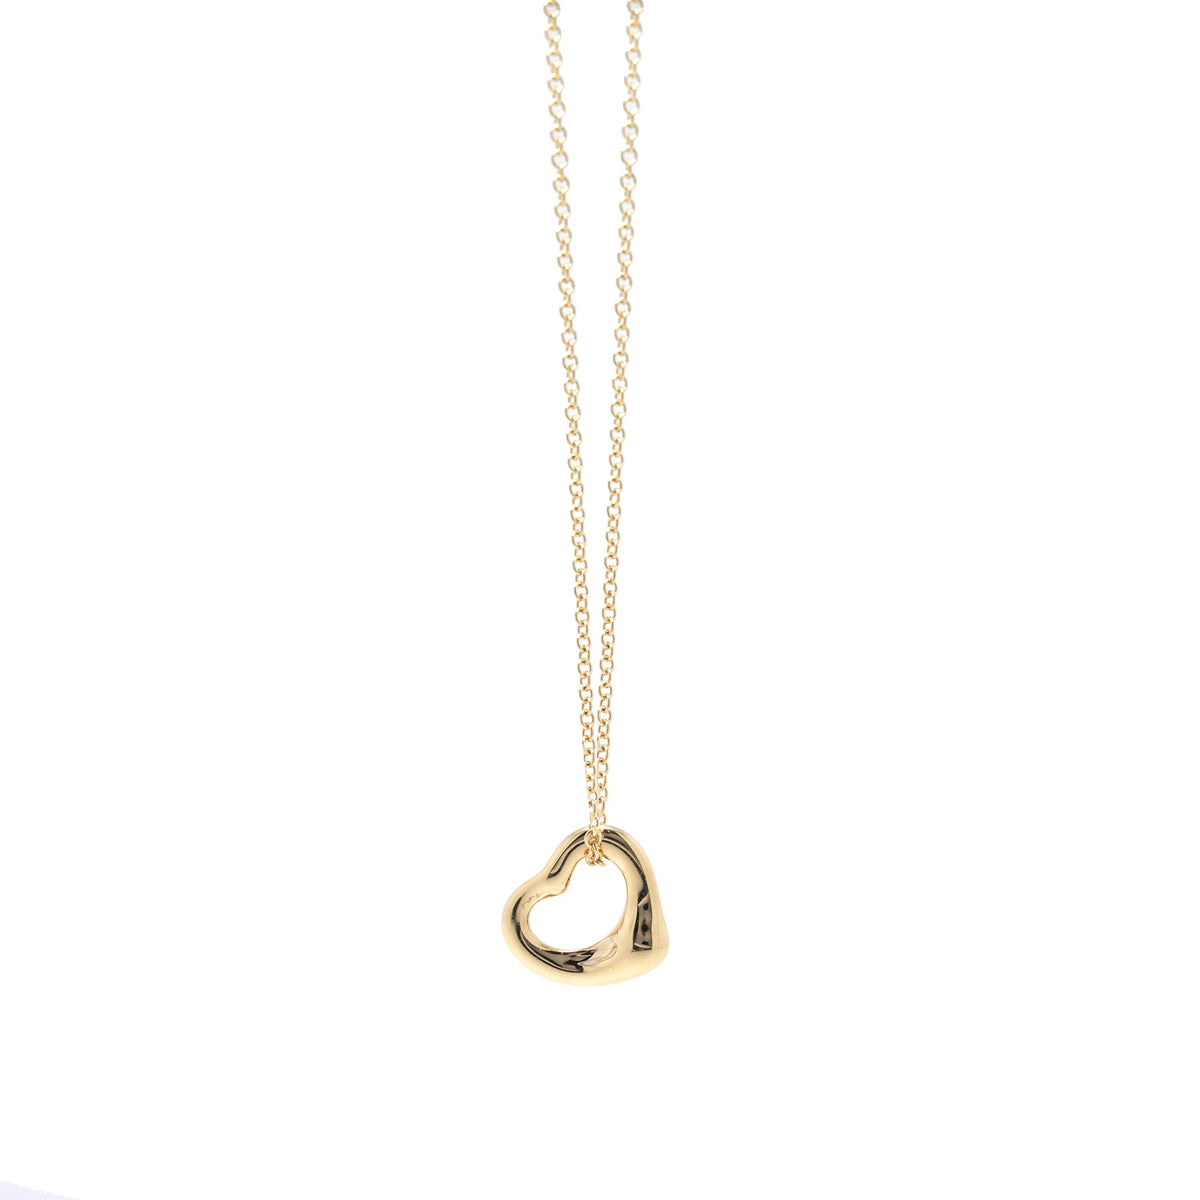 Tiffany & Co. Elsa Peretti 18K Yellow Gold 11mm Open Heart Pendant Necklace 16